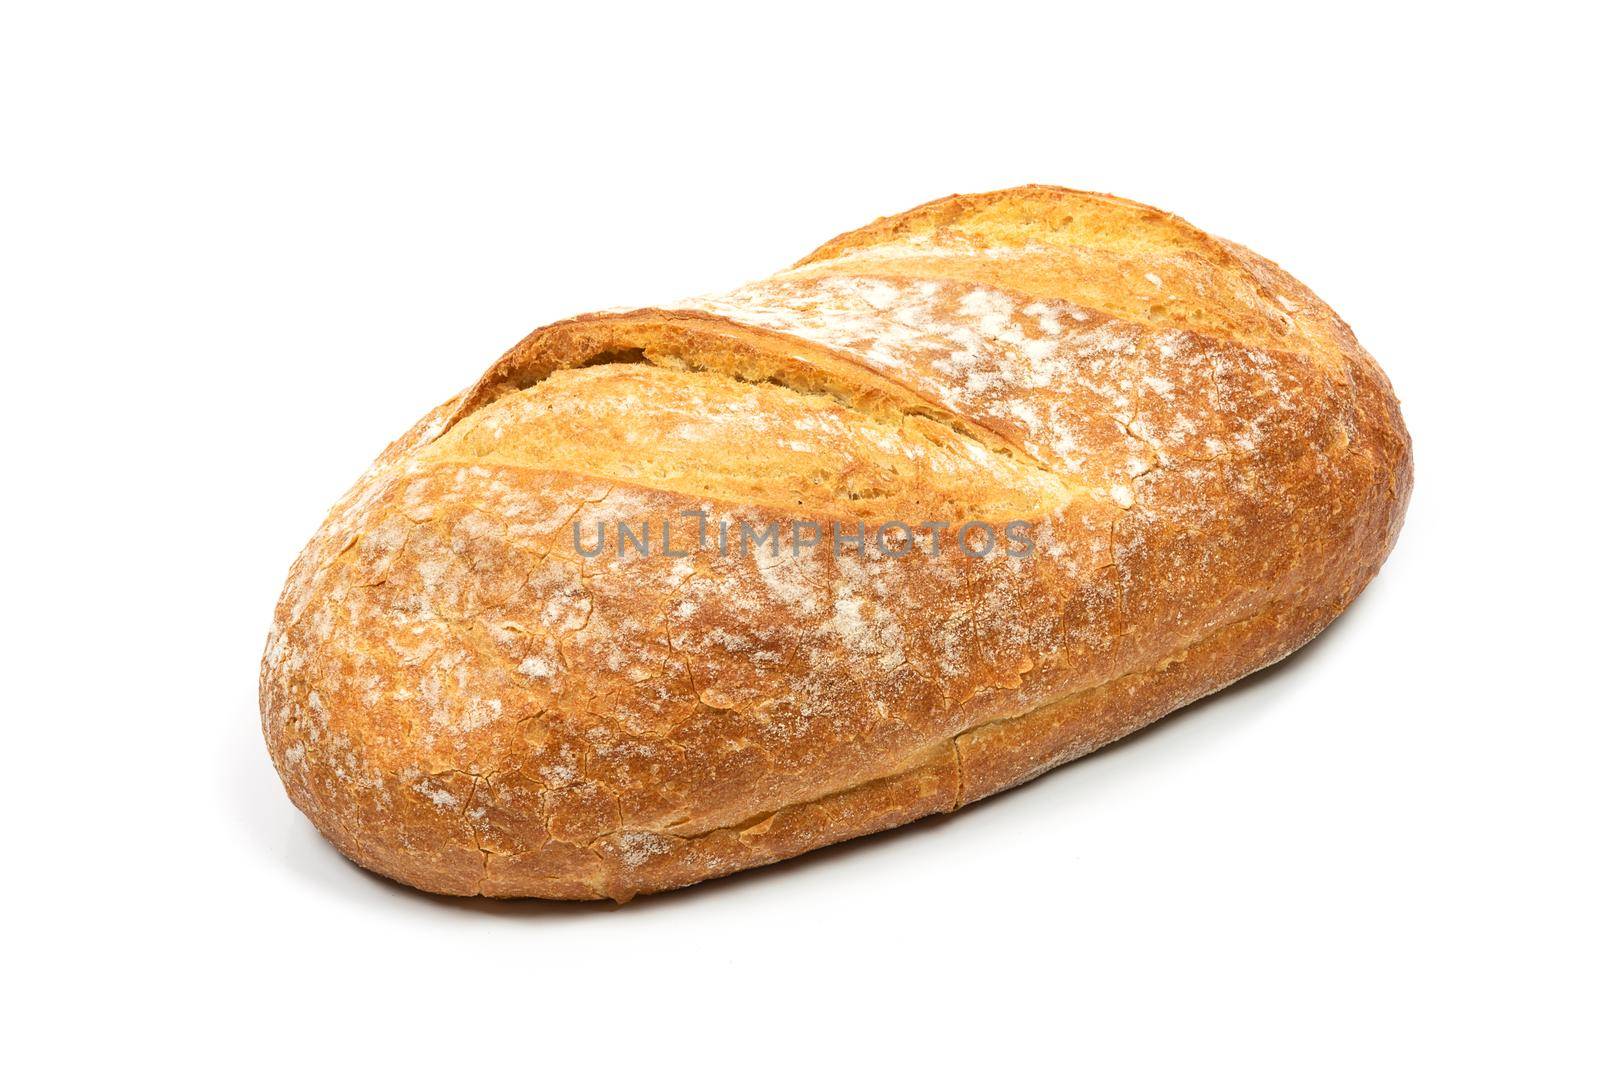 Big loaf of bread by wdnet_studio